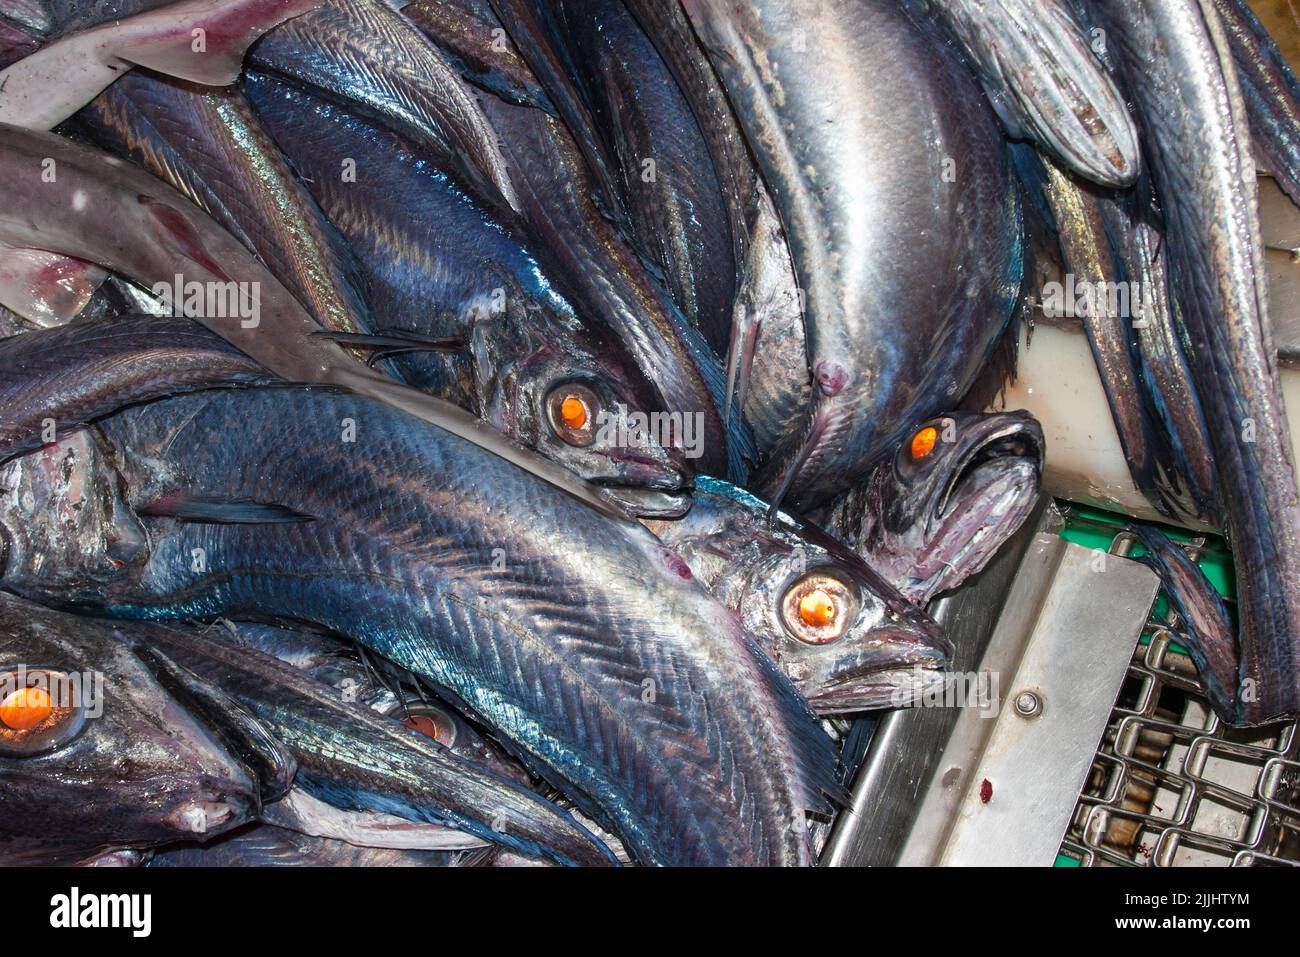 A Look at life in New Zealand: Freshly landed catch, from a deep-sea fishing trawler: Hoki fish (Macruronus novaezelandiae). Stock Photo